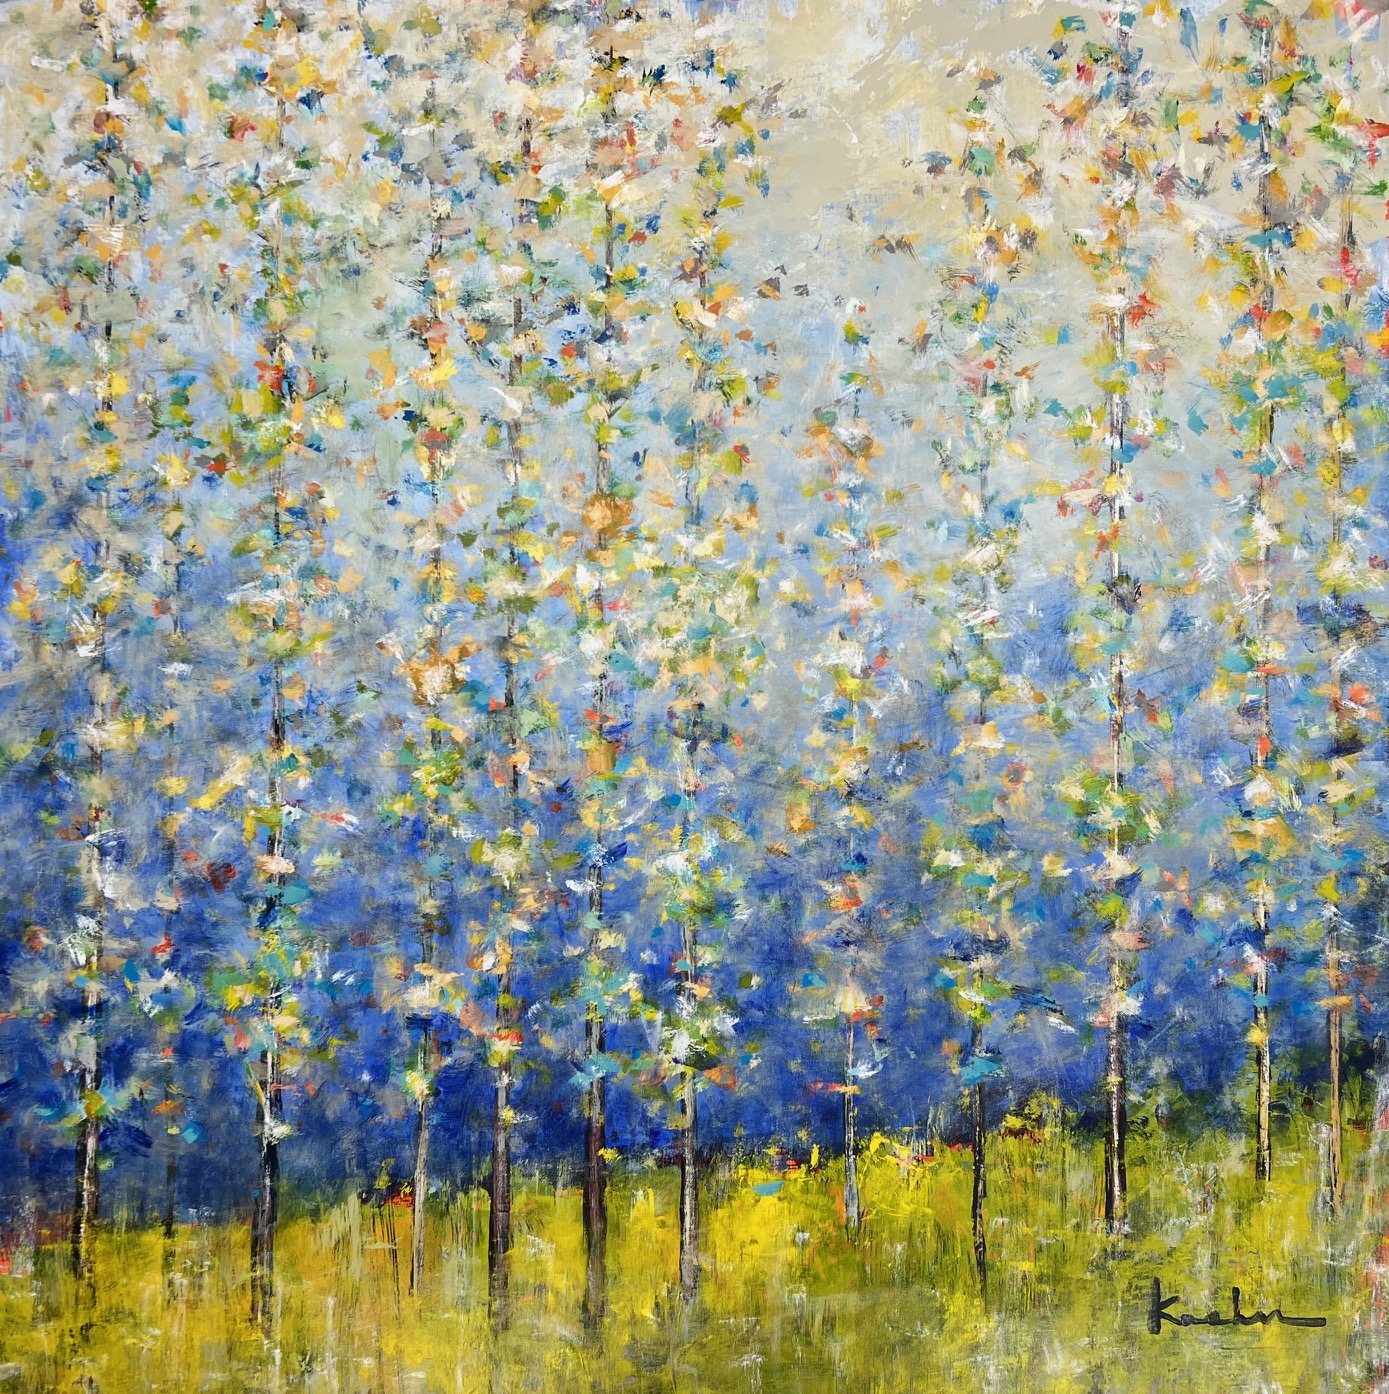 JEFF KOEHN - Sunshine - Oil on Canvas - 40 x 40 inches